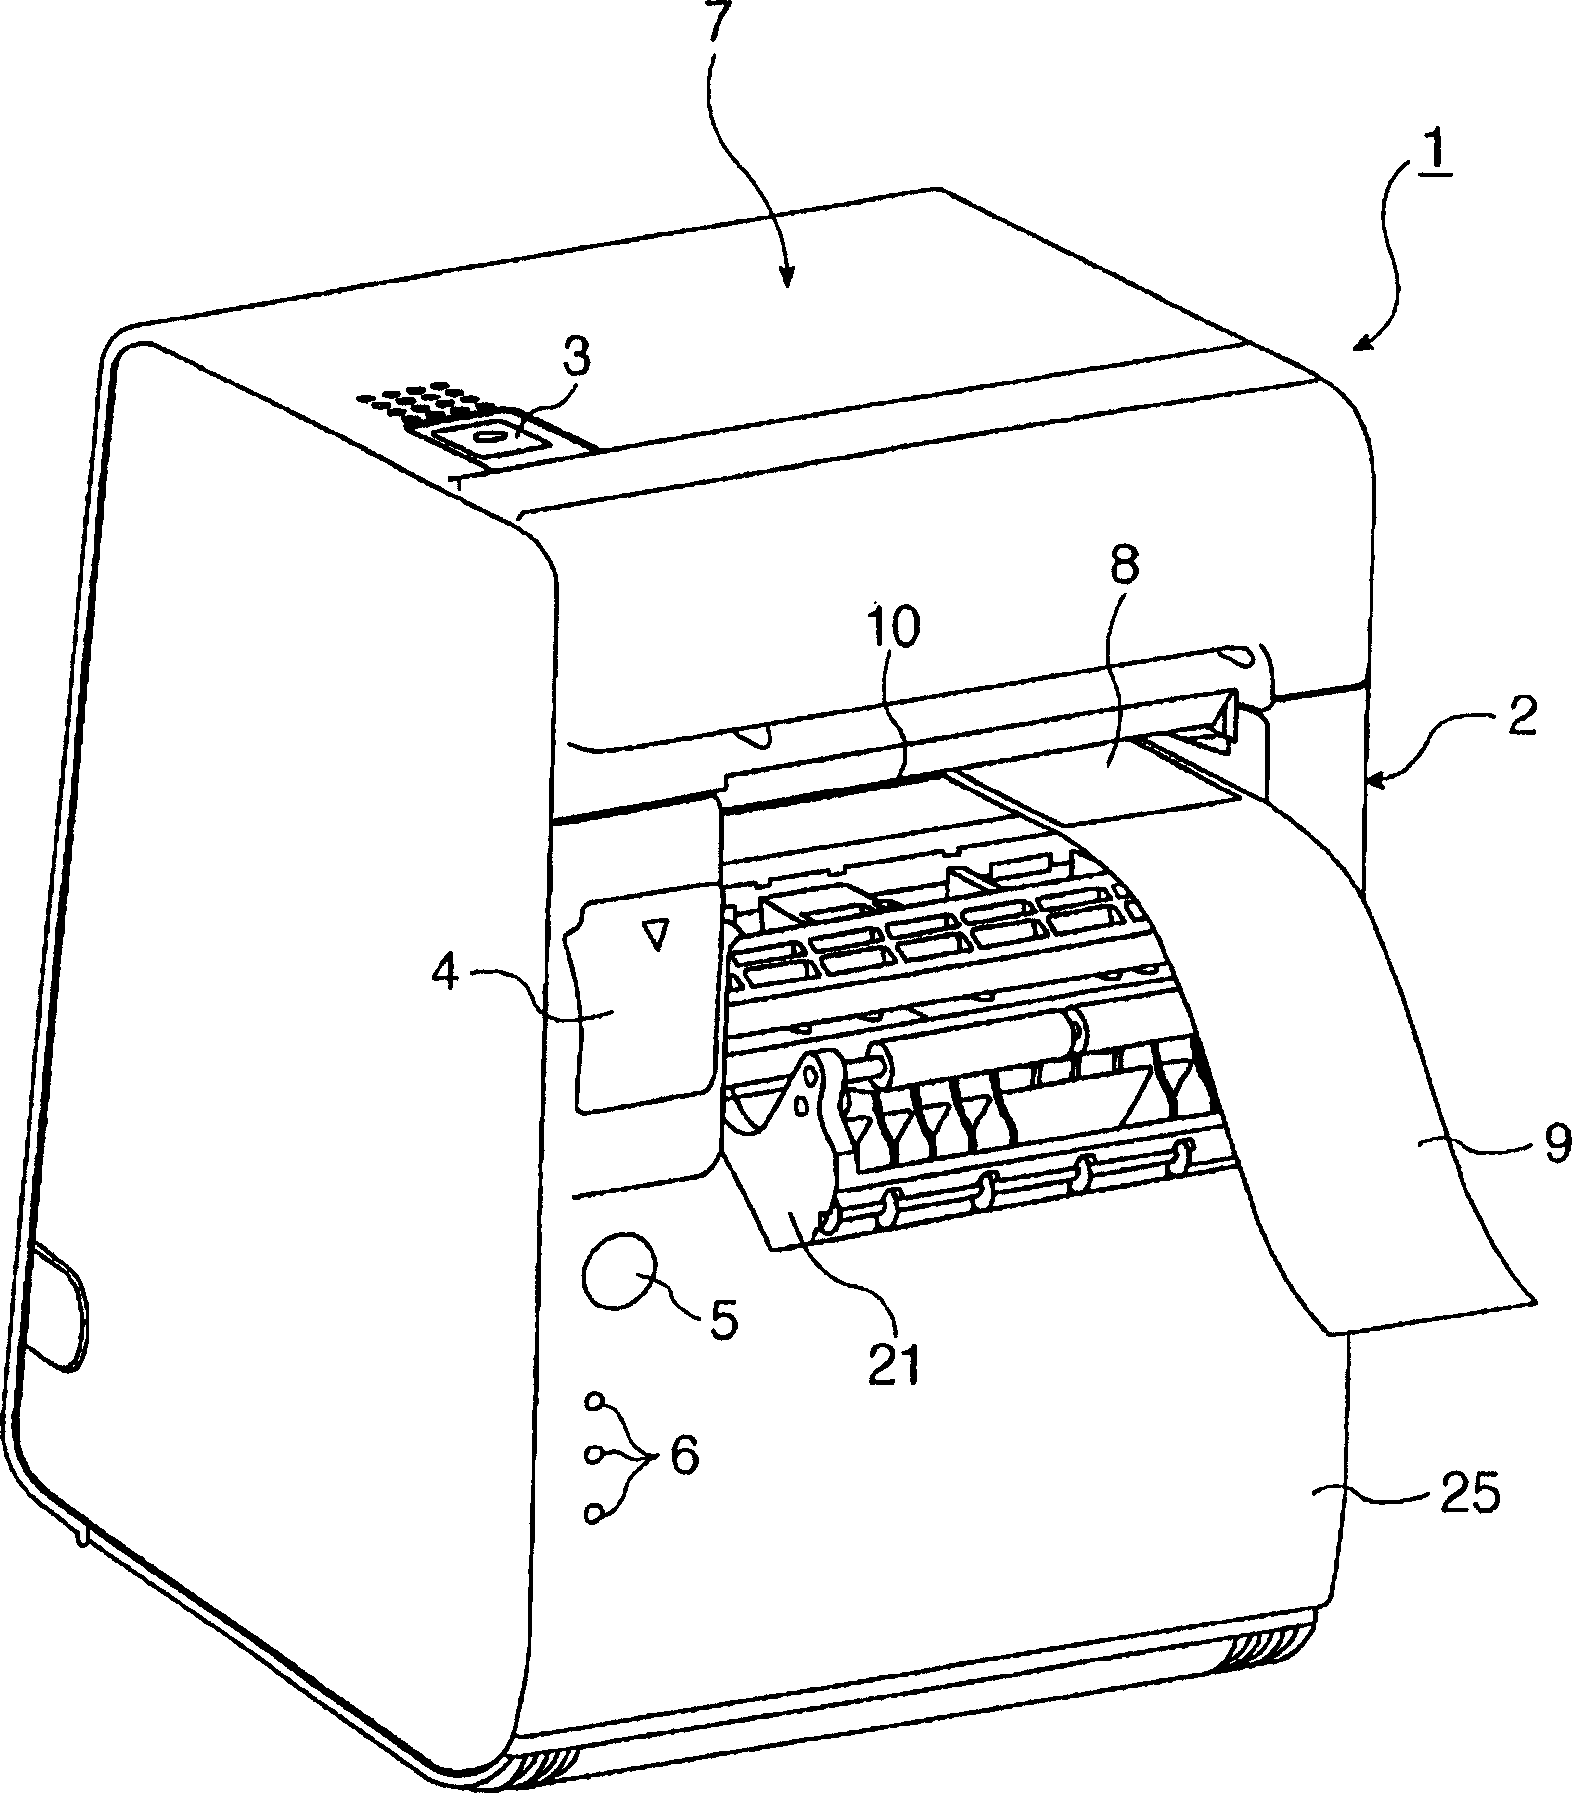 Label printer